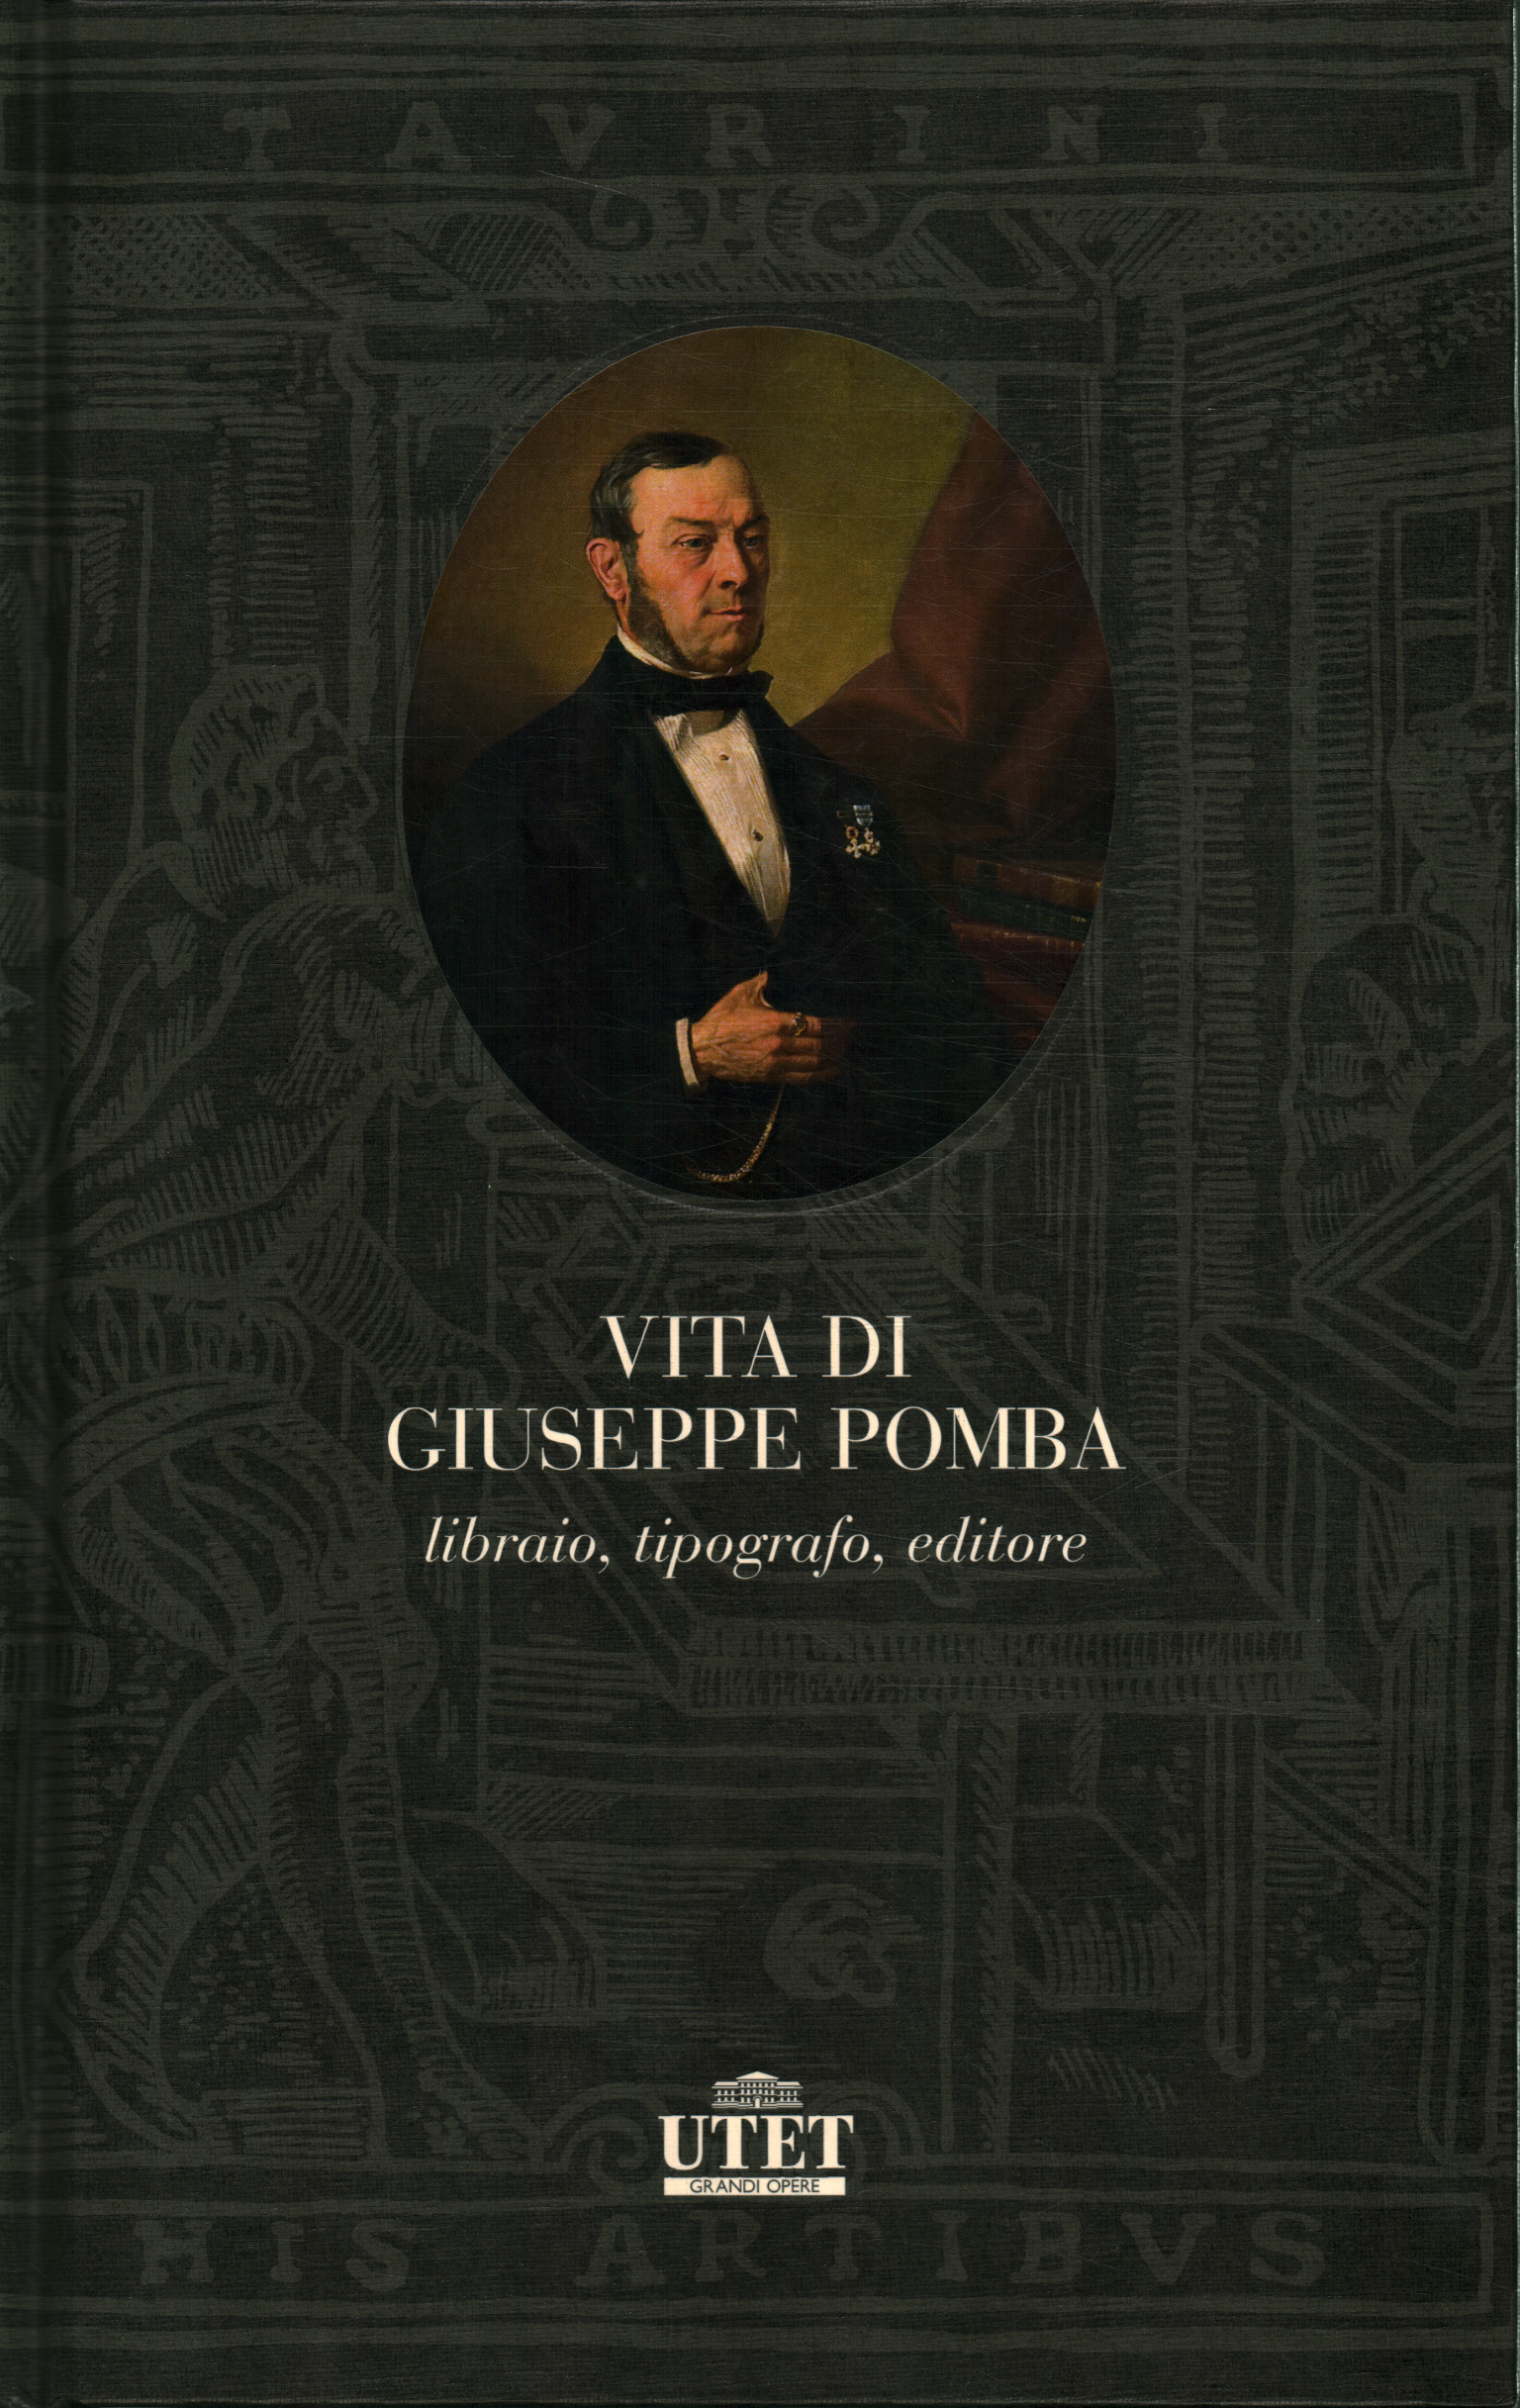 Leben von Giuseppe Pomba